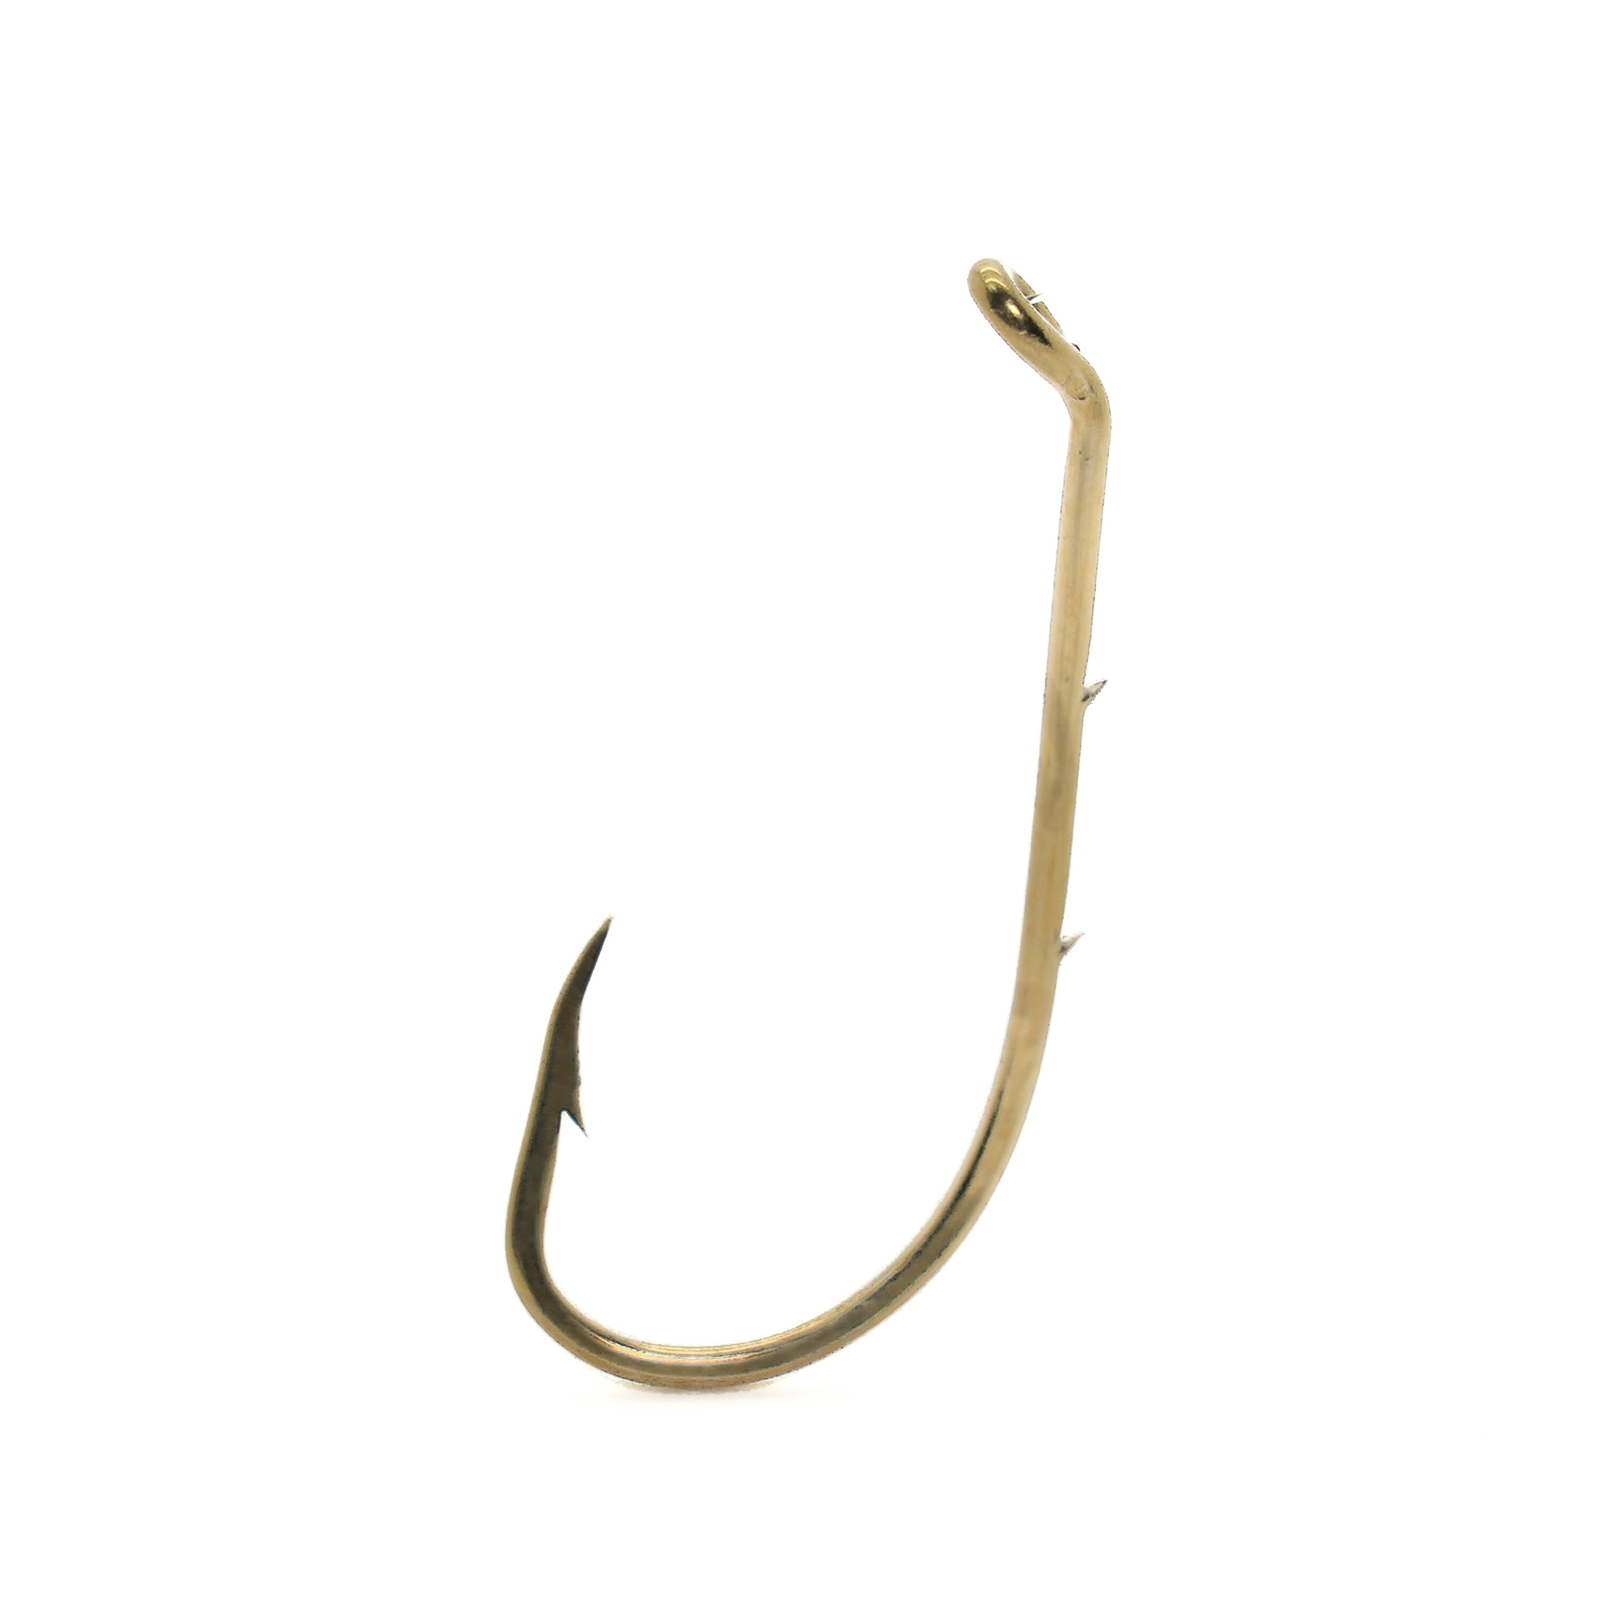 Mustad® 92611-NI-1-10 - Long Shank 1 Size Nickel Beak Hooks, 10